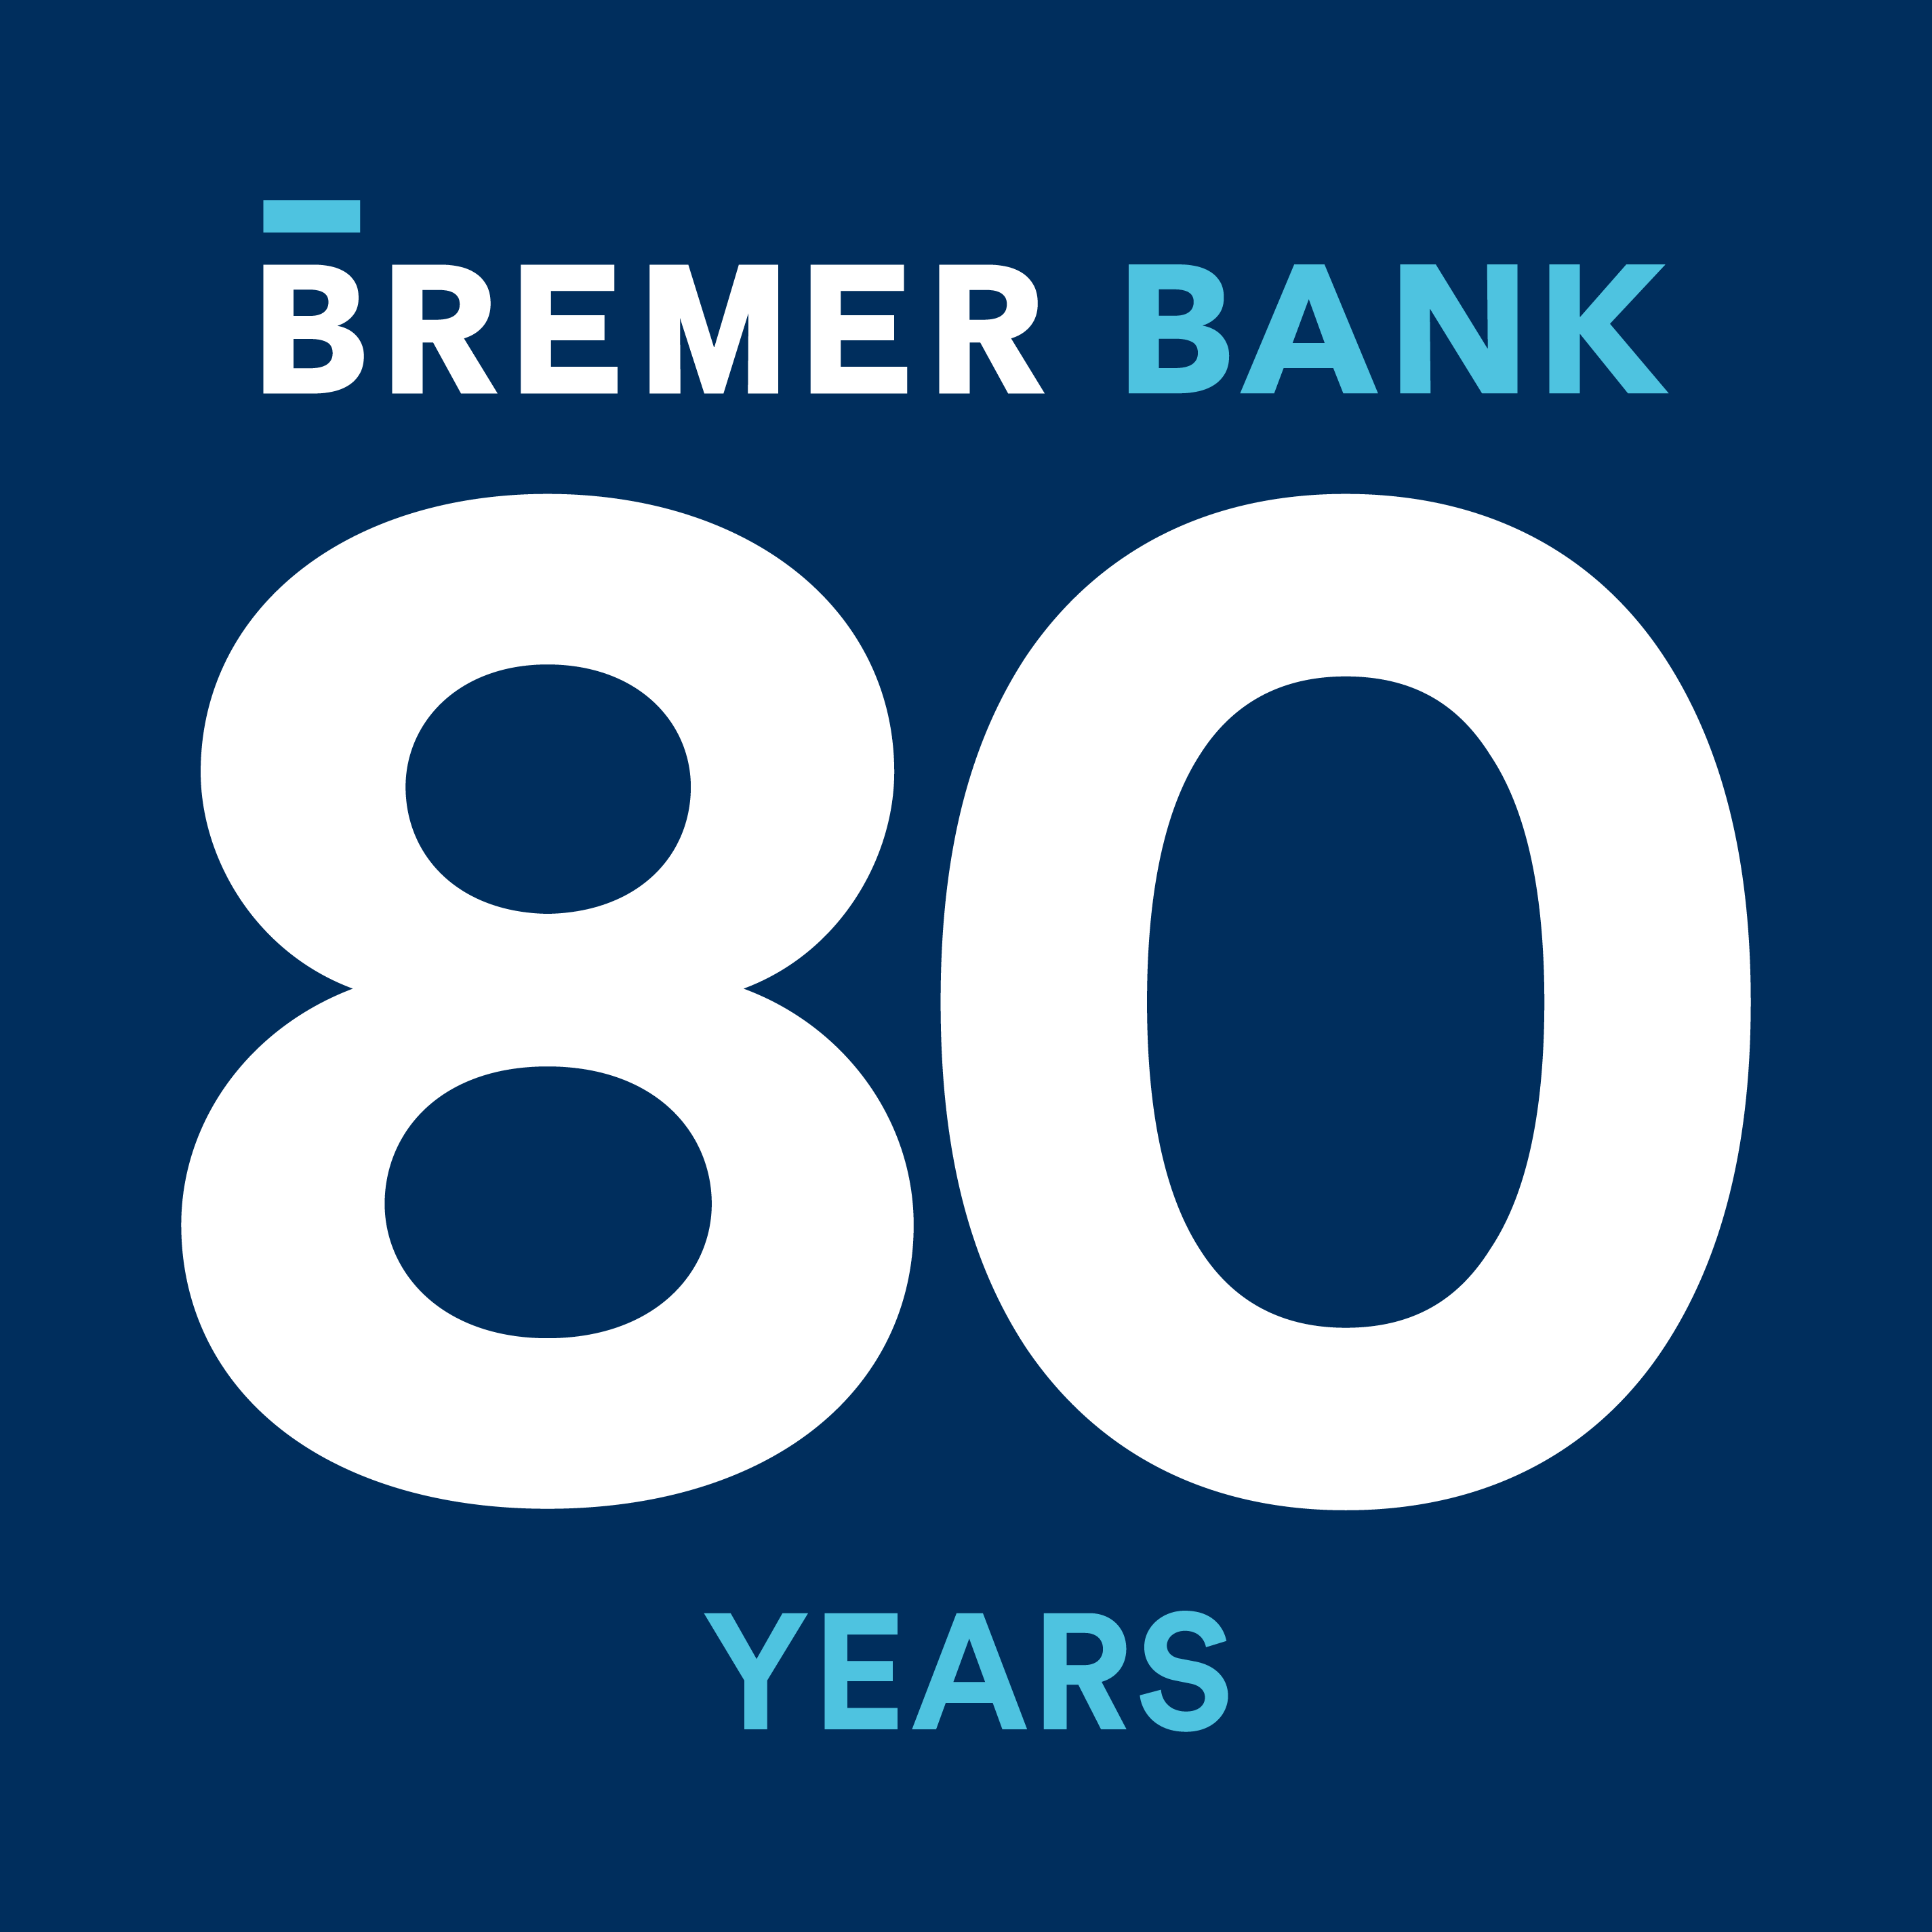 bremer bank 80 years